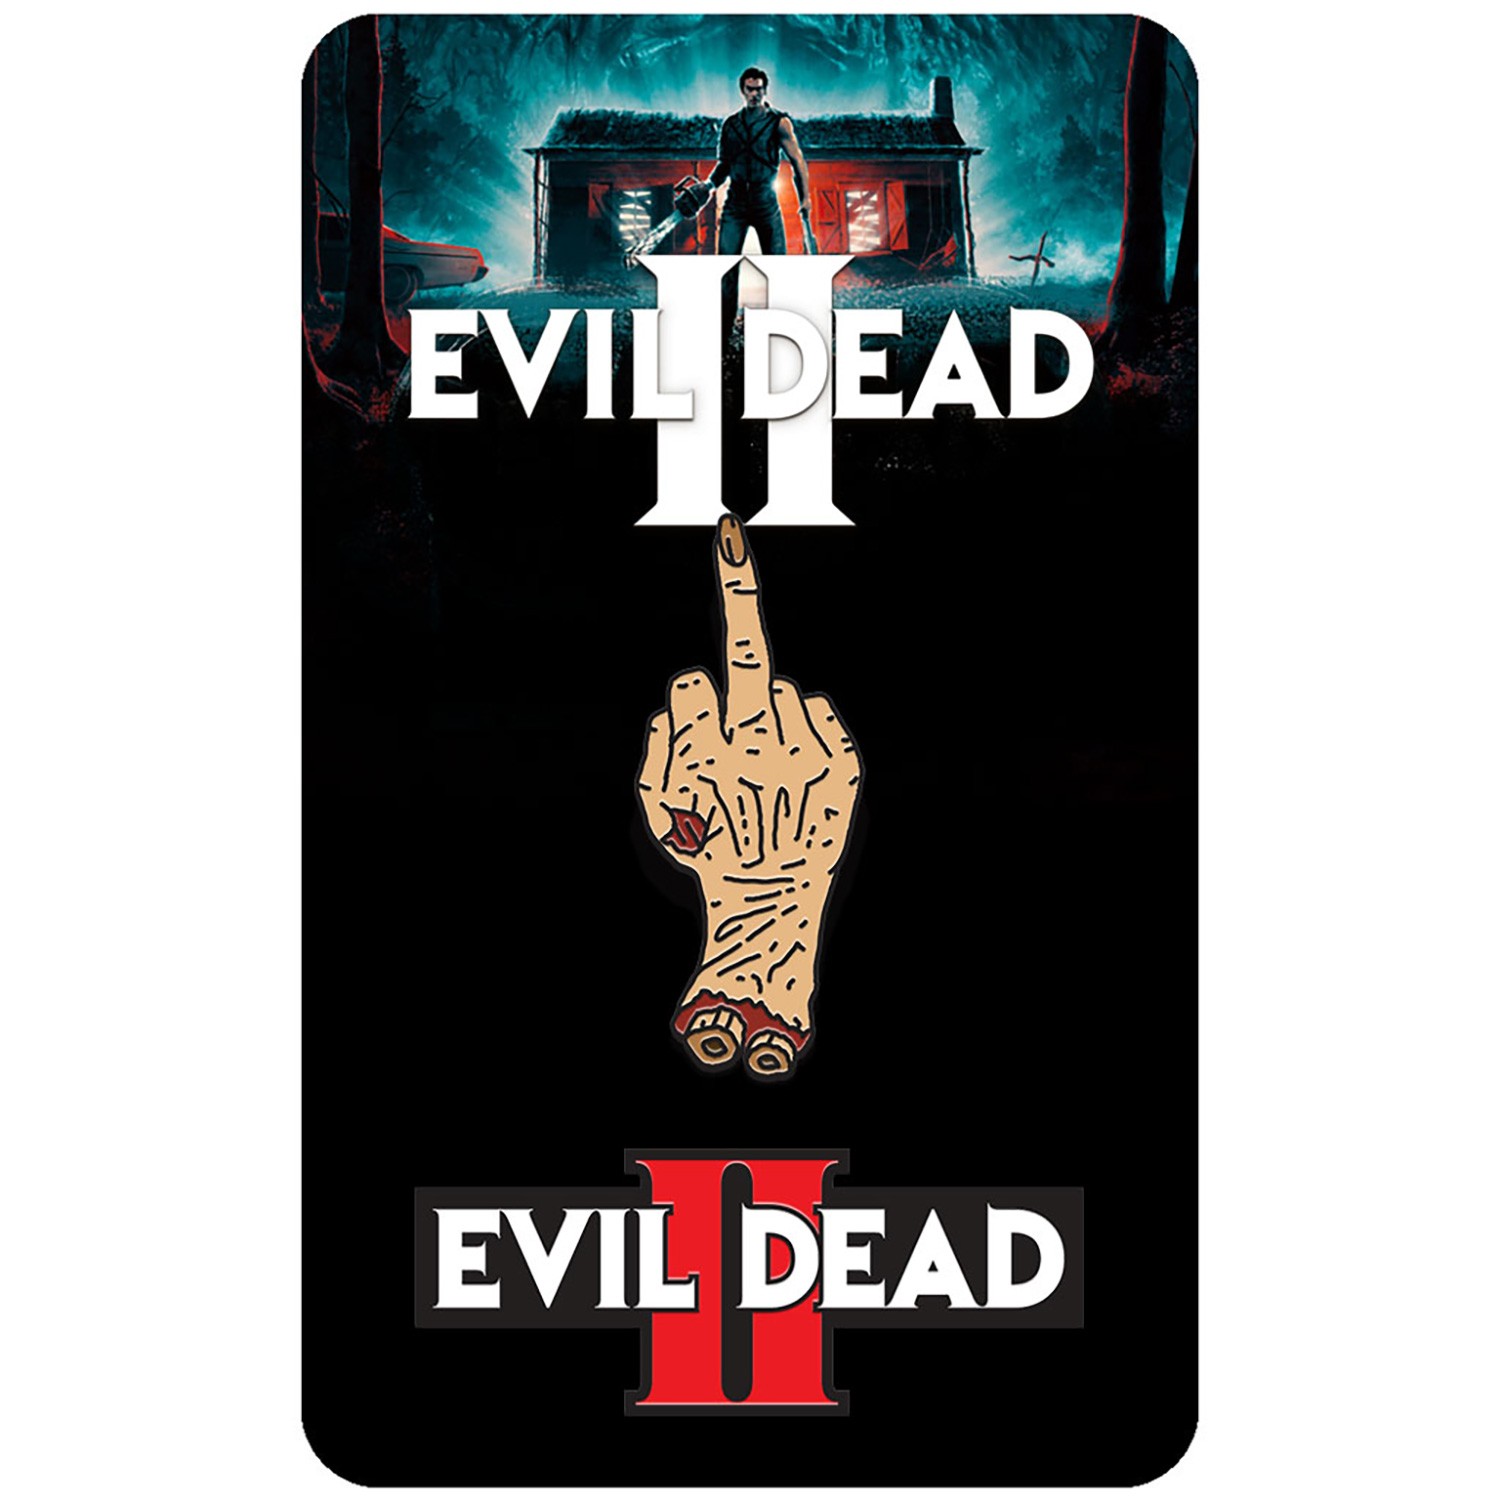 Evil Dead II Art Print & Collector Pin Set View 2